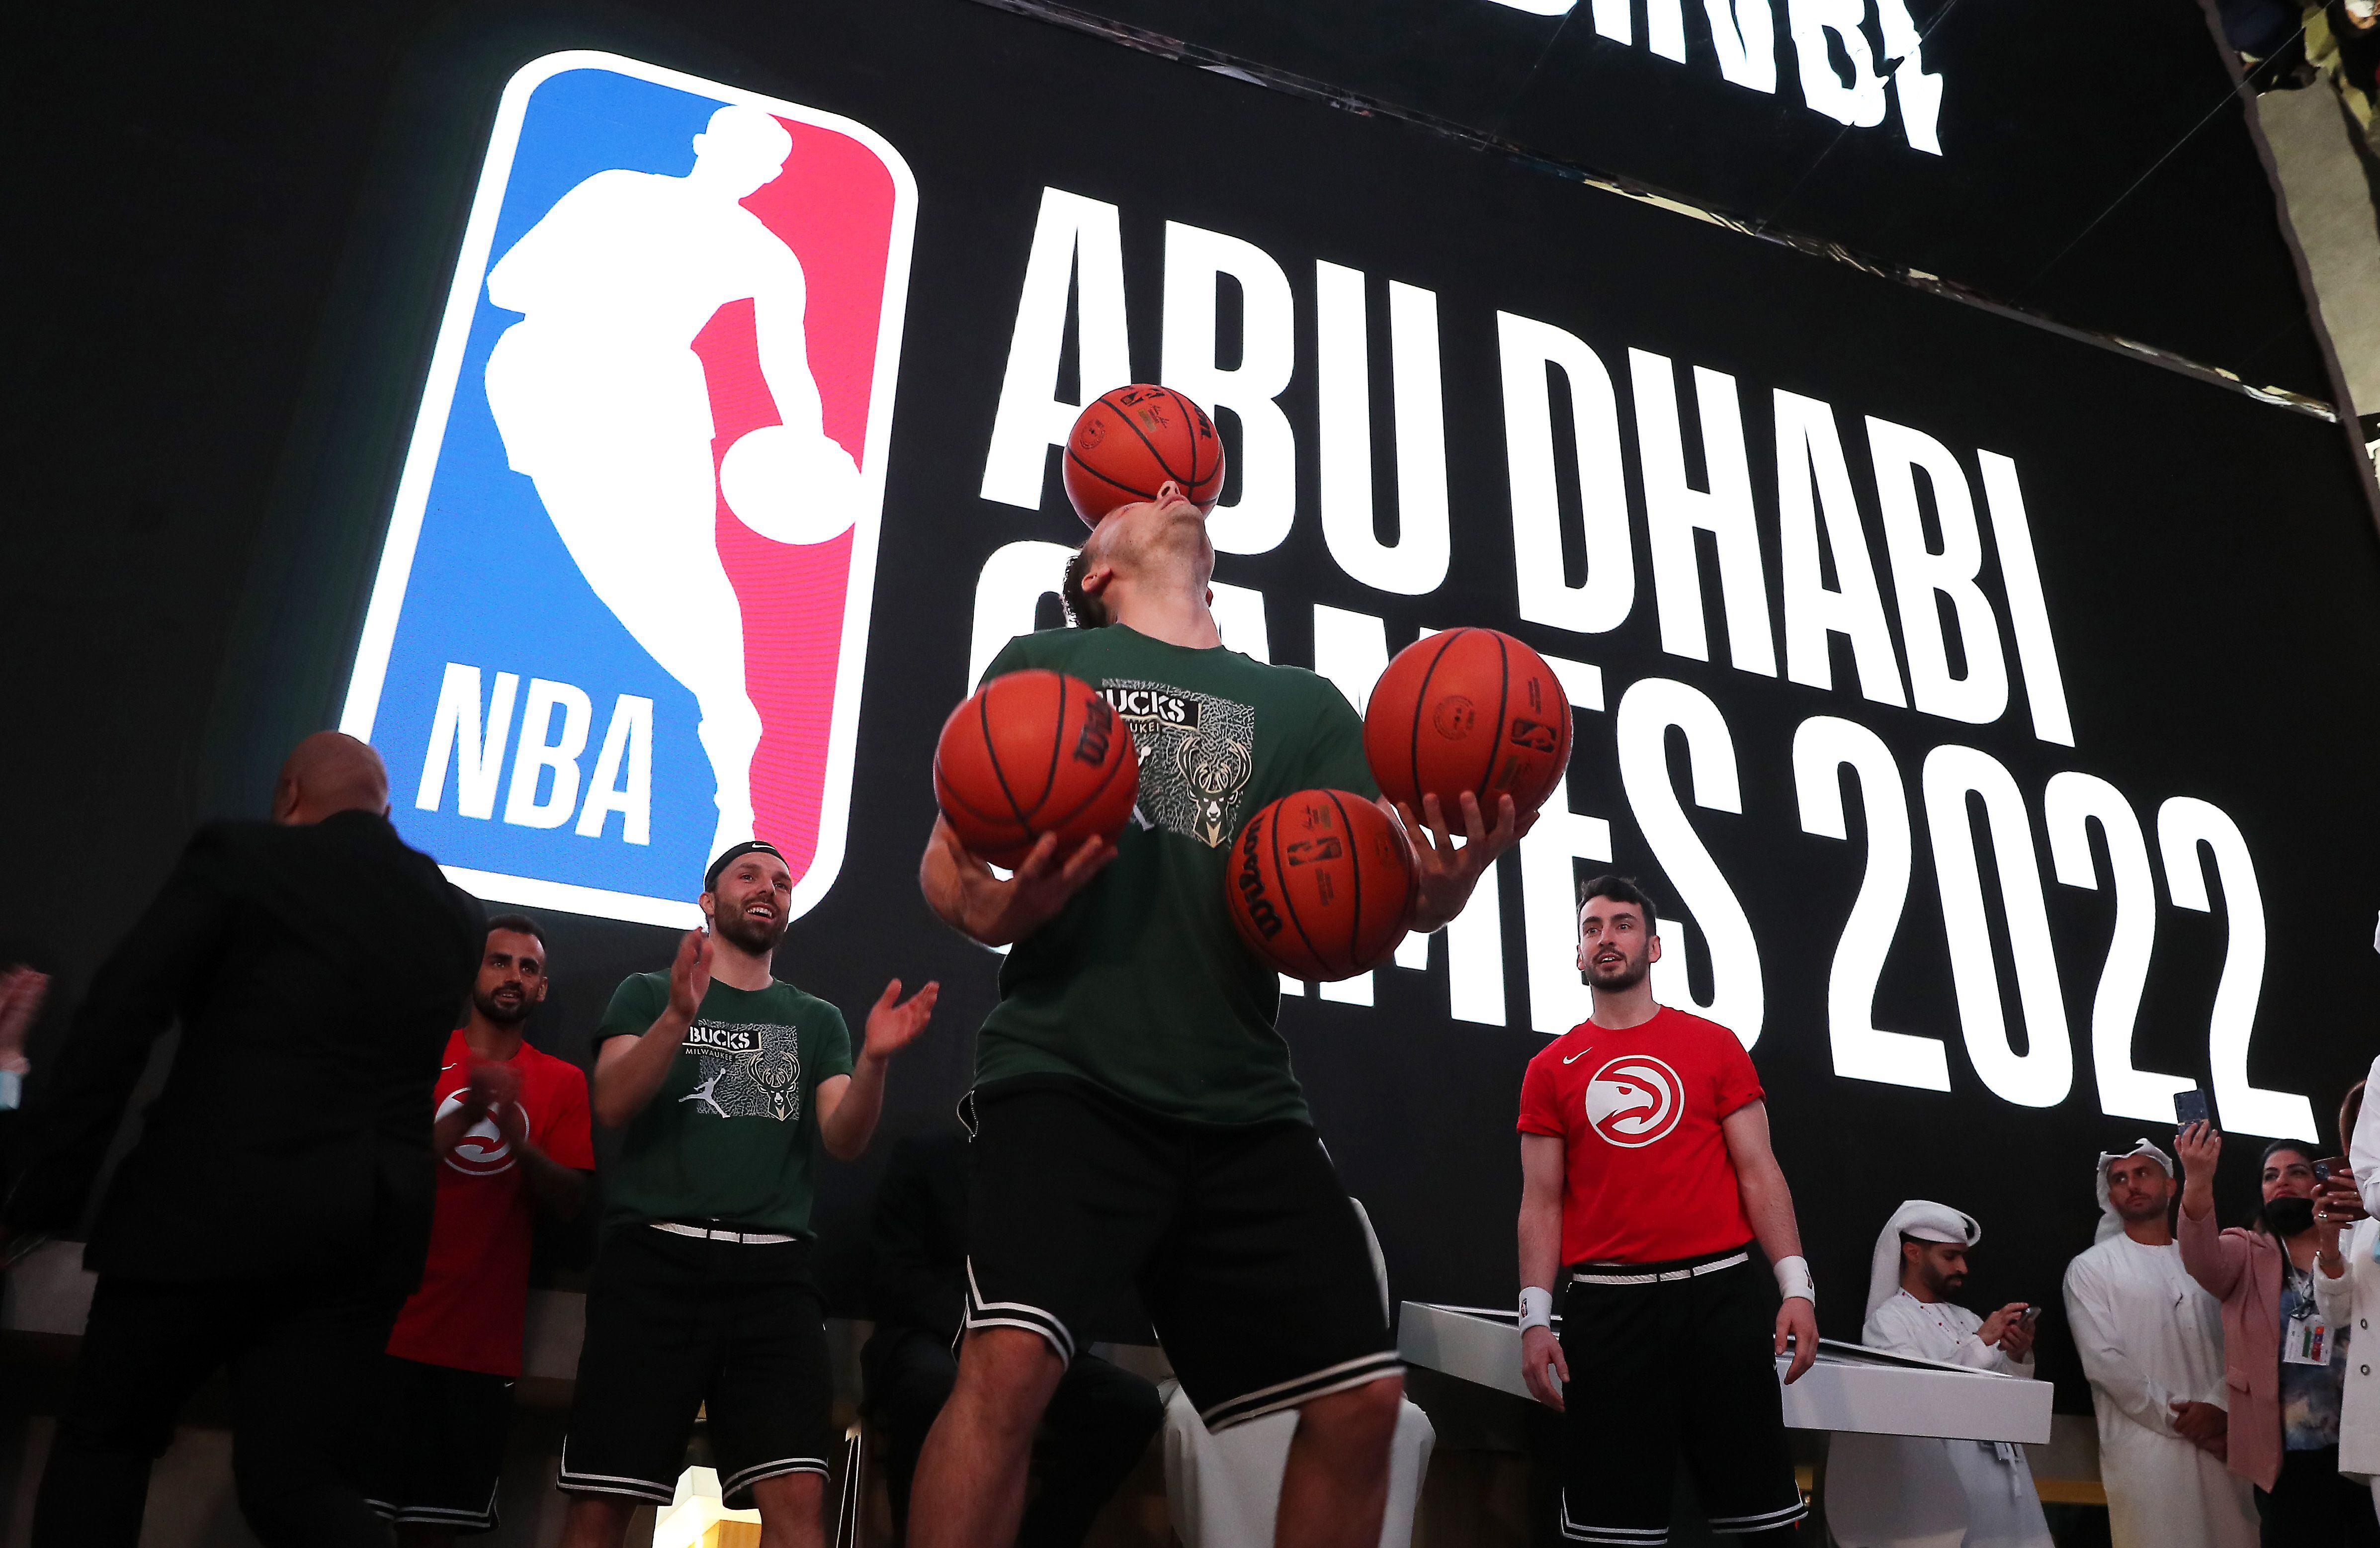 NBA in Abu Dhabi 2022: How to meet hero Shaquille O'Neal